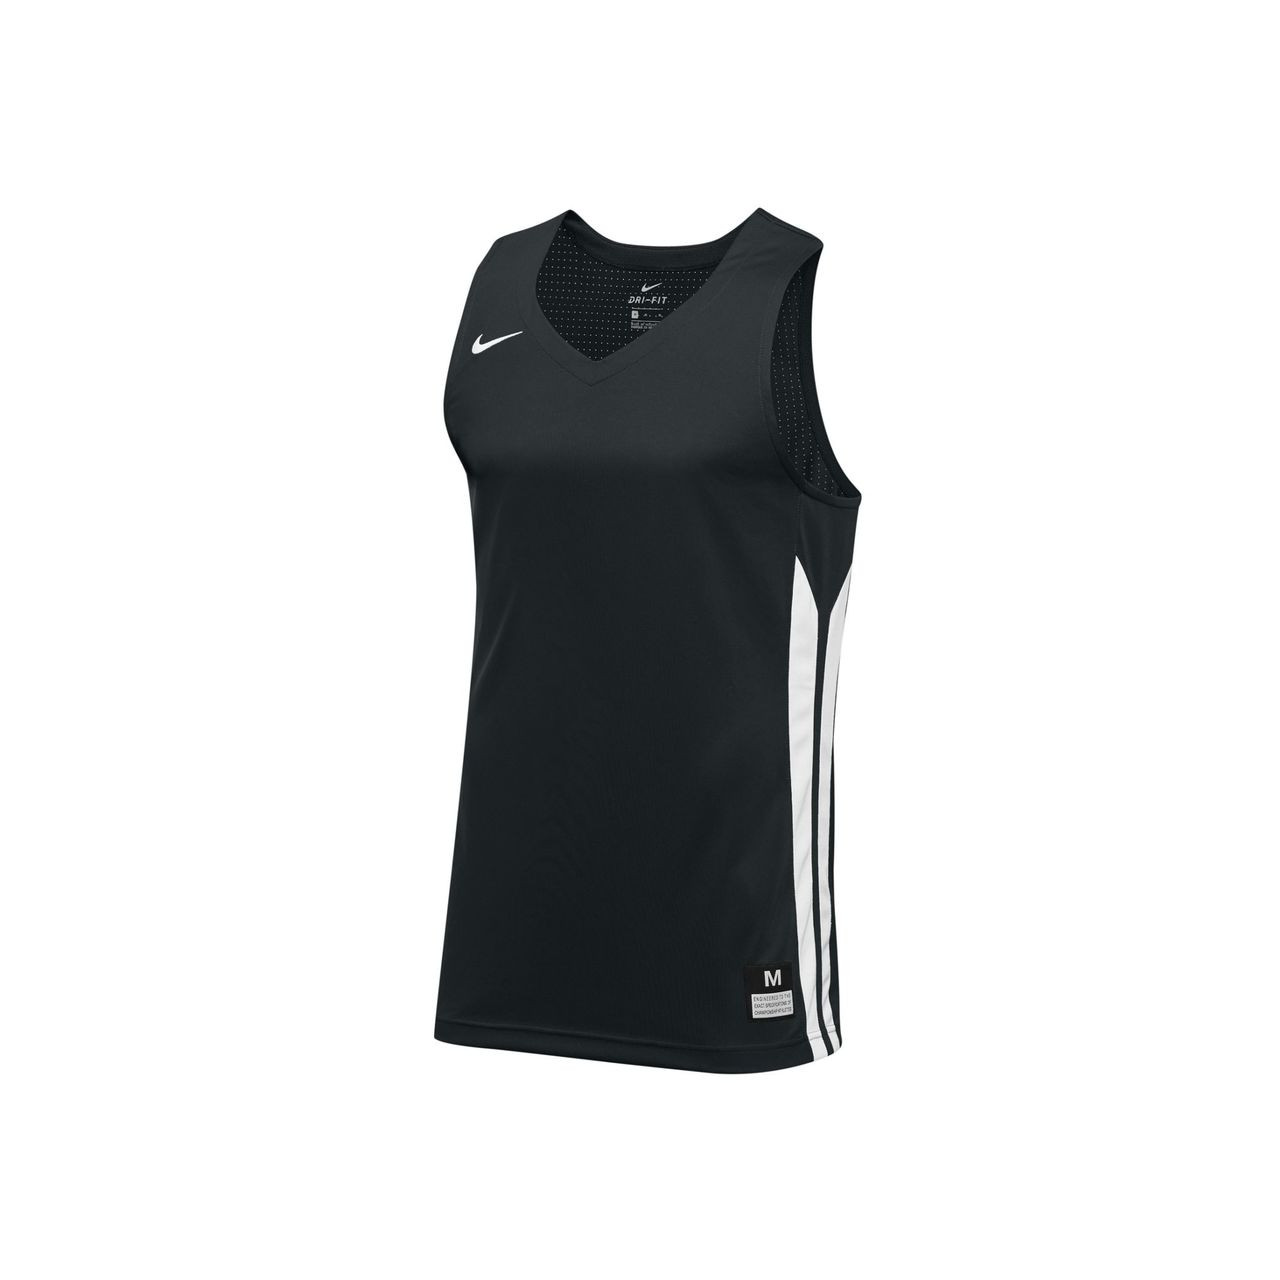 Nike Men's Hyperelite Jersey - Black/White